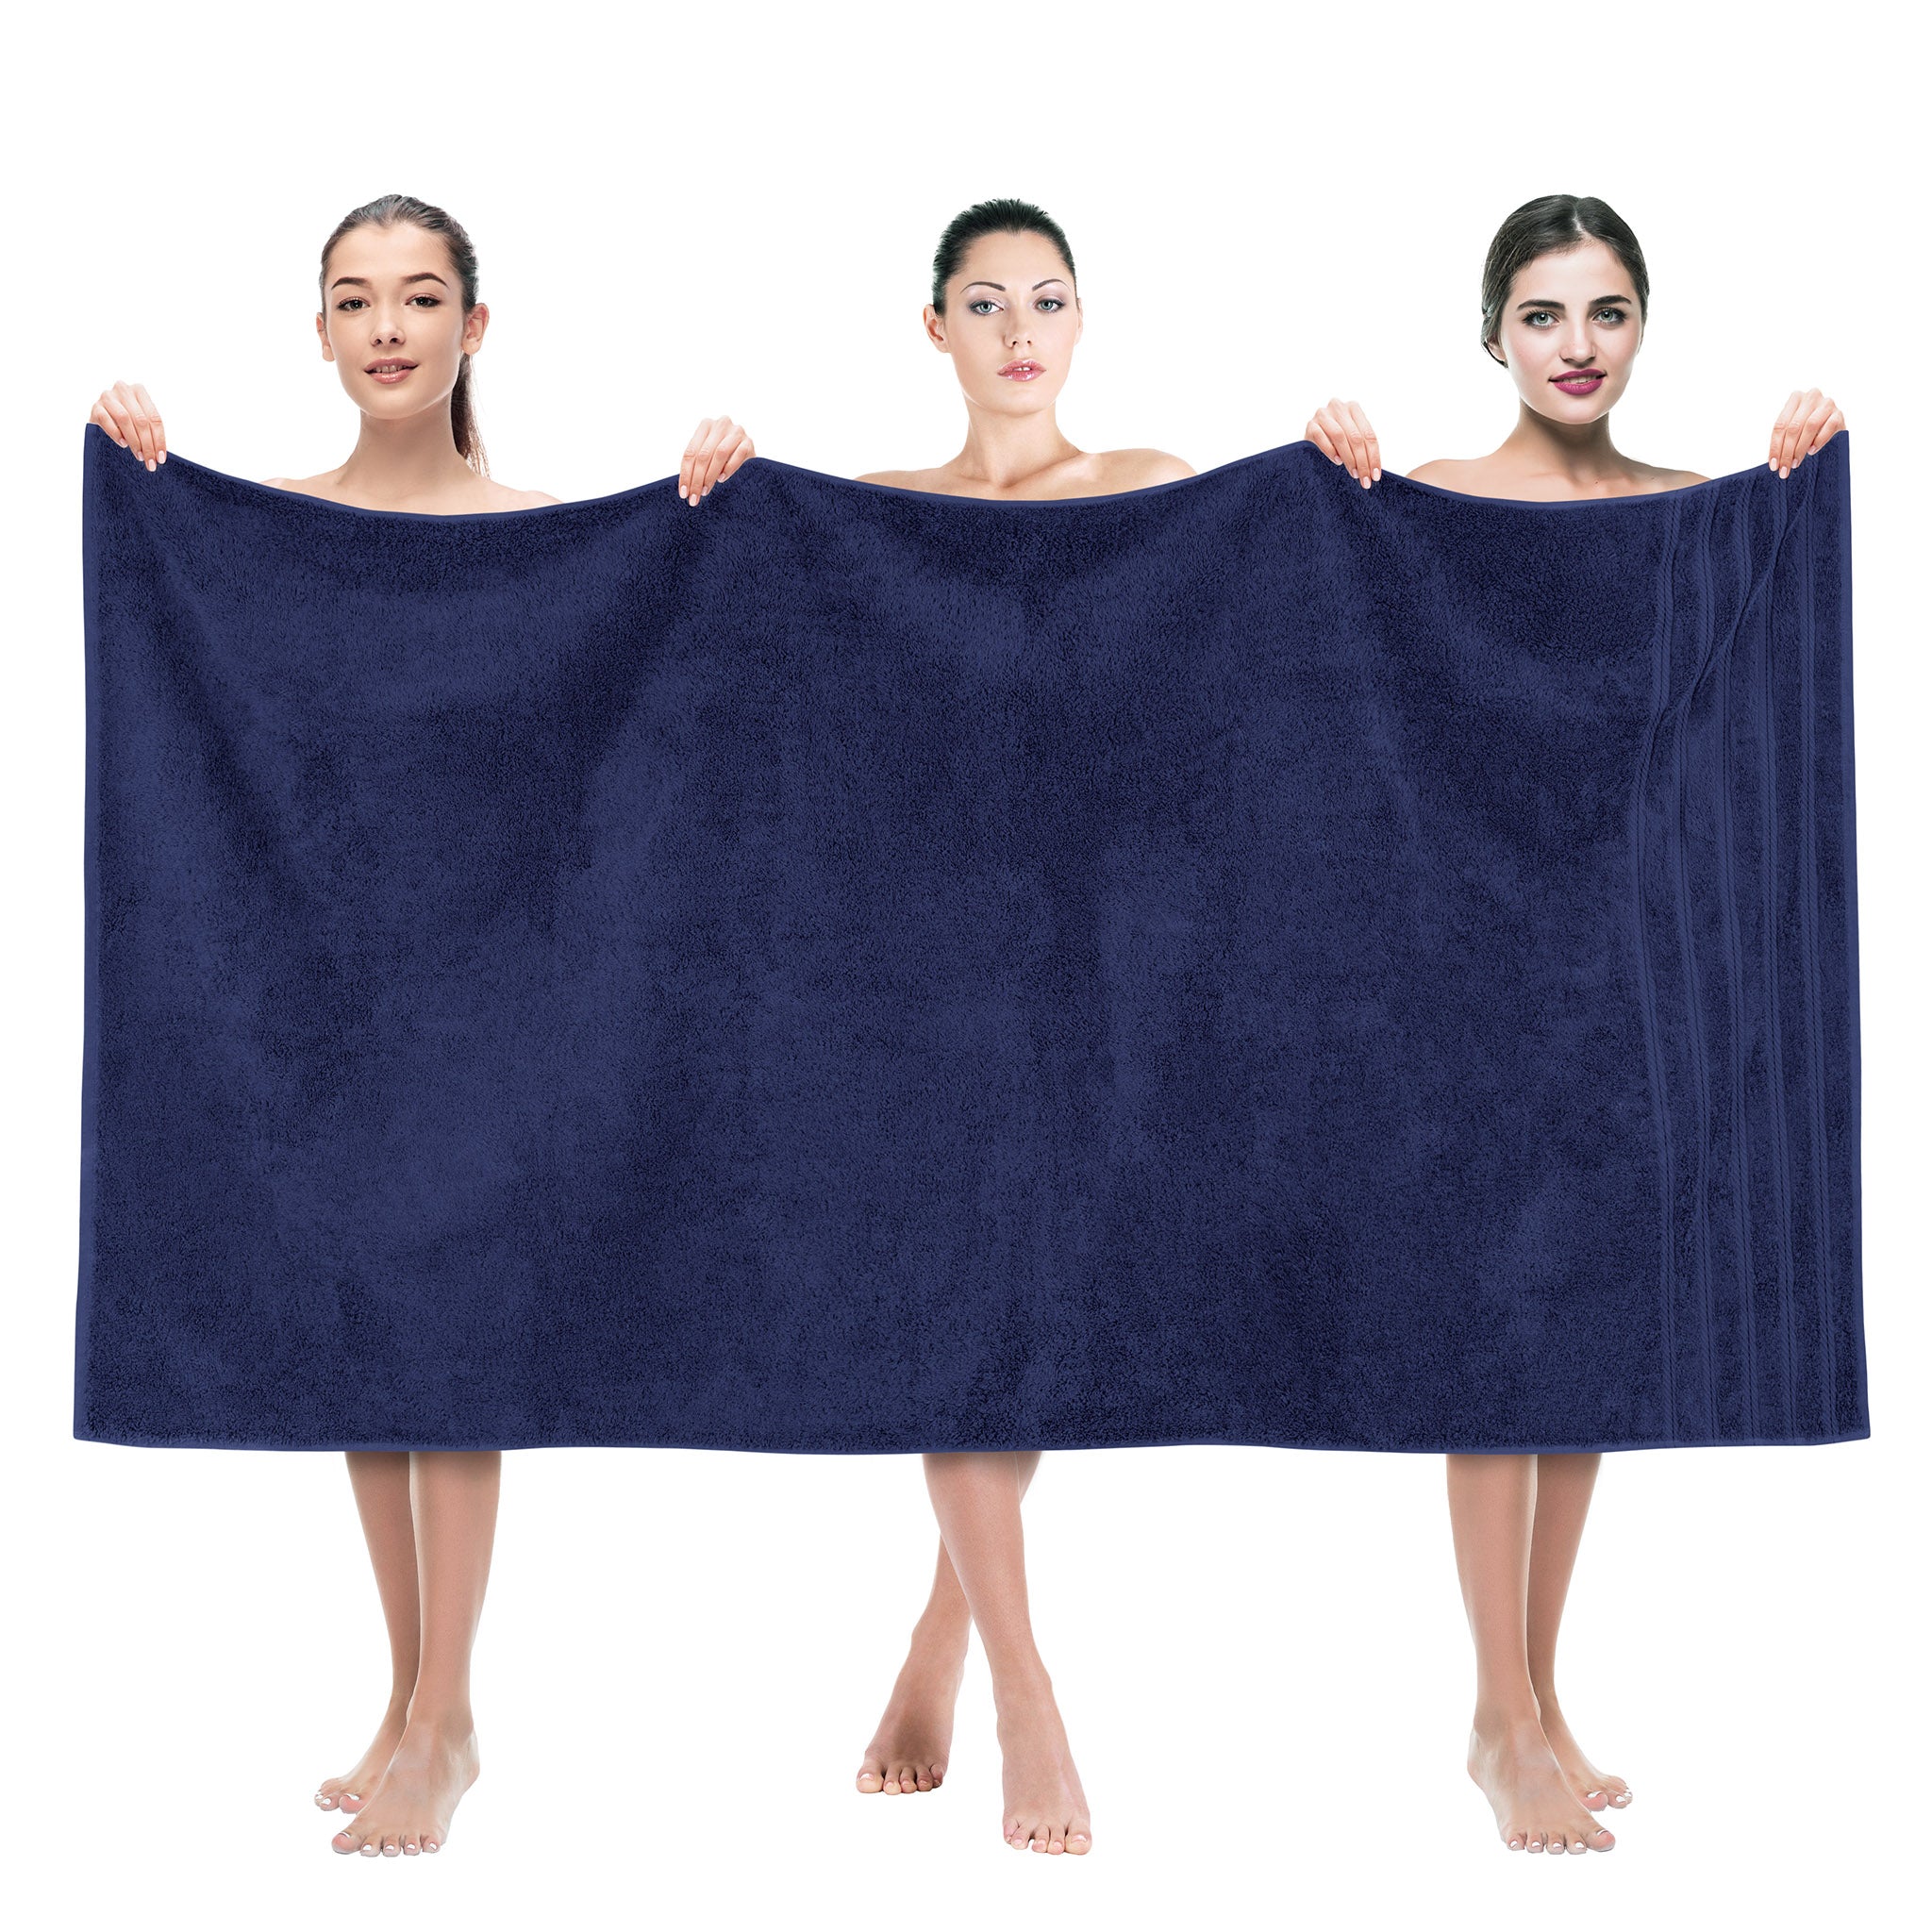  Large Bath Towels 35x70 Clearance